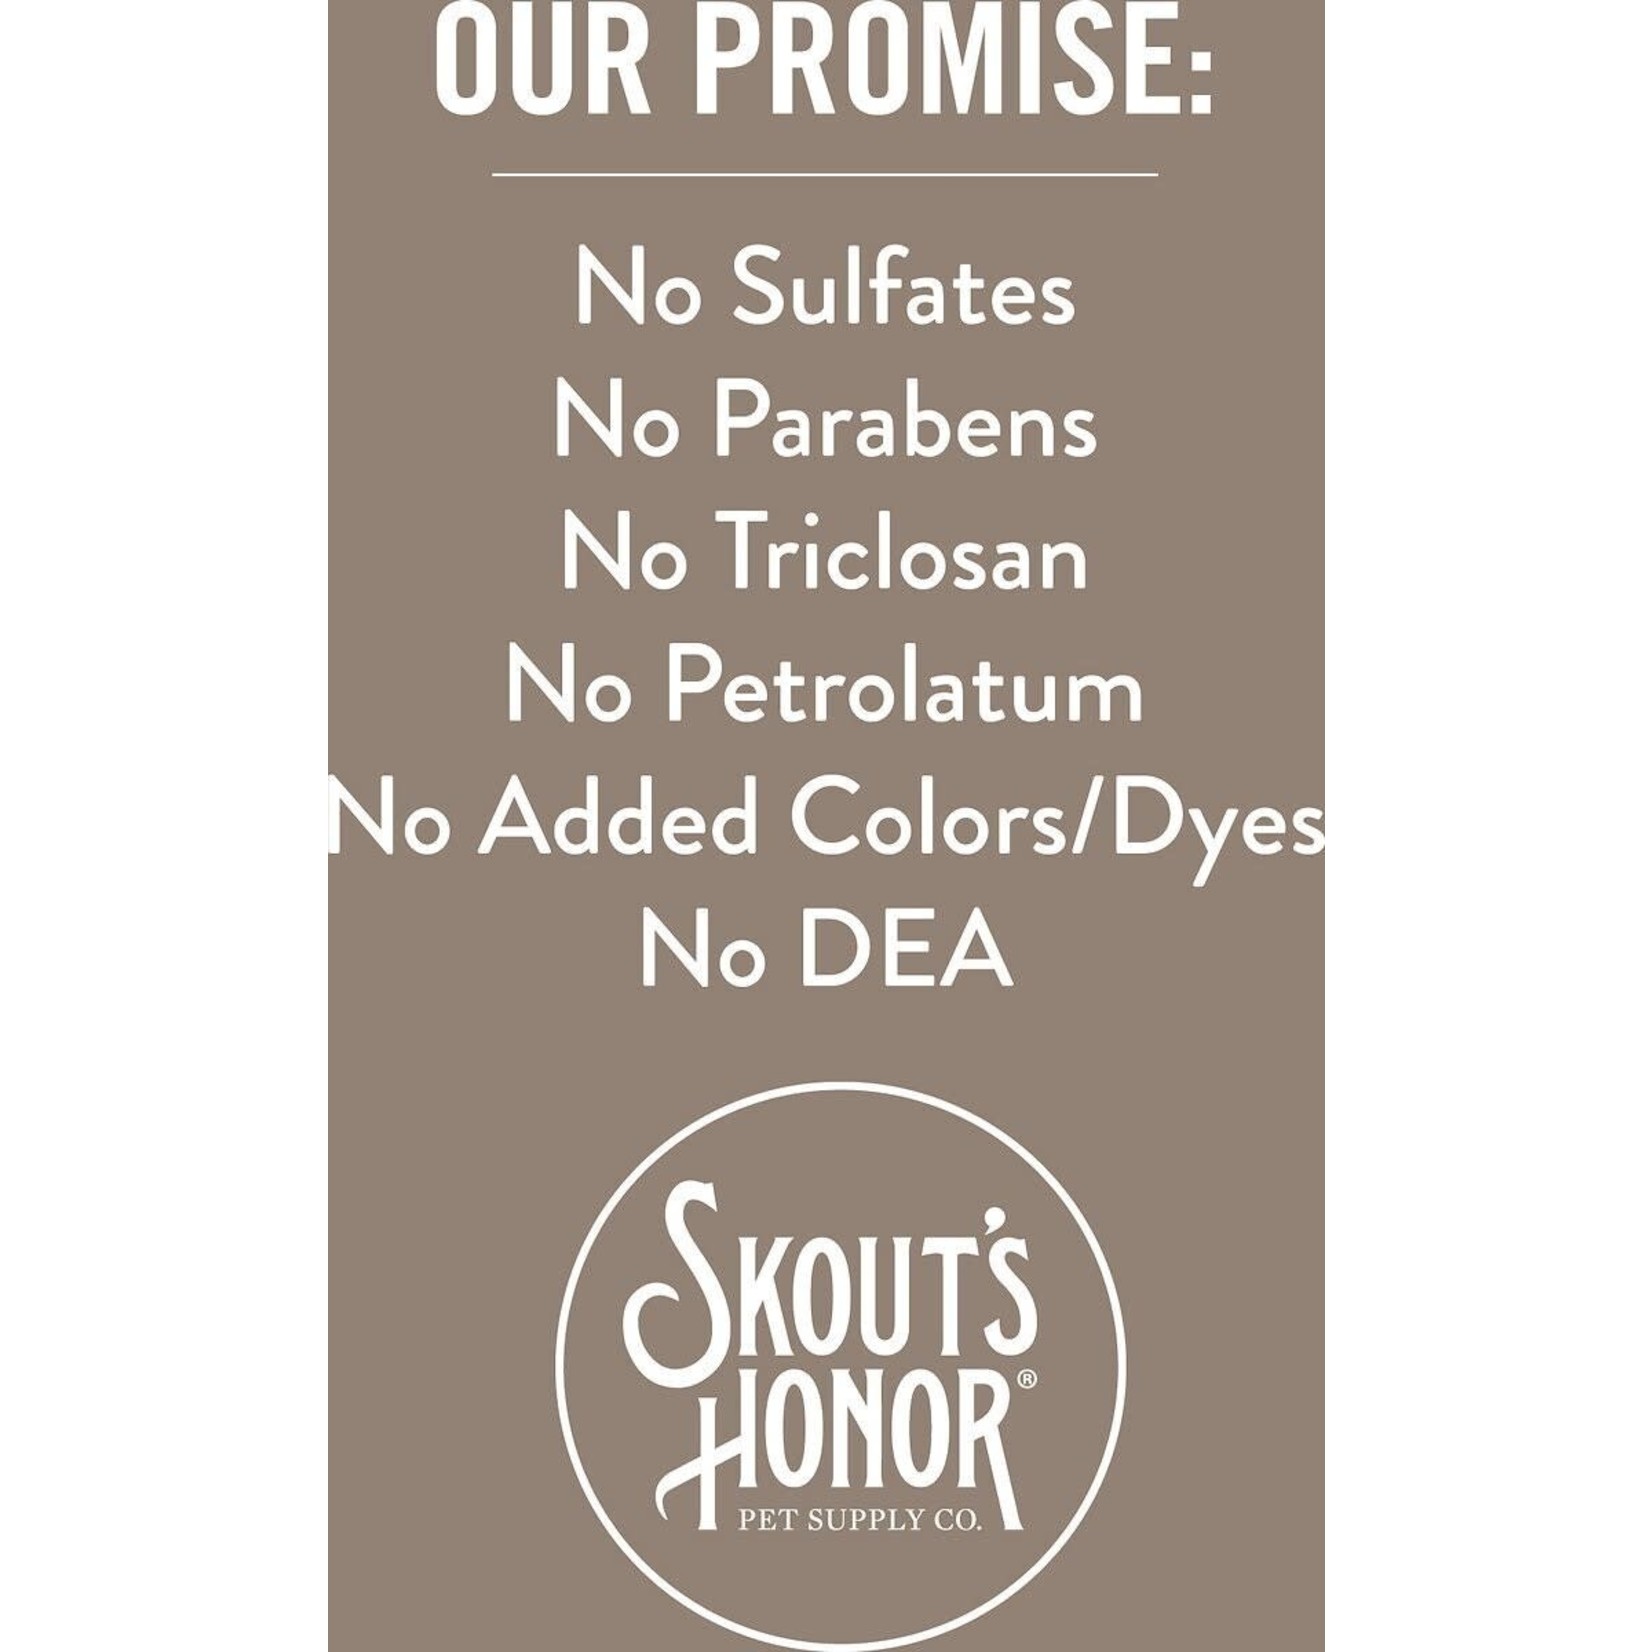 Skout's Honor Skout’s Honor: Probiotic Detangler: Dog of the Woods 8oz